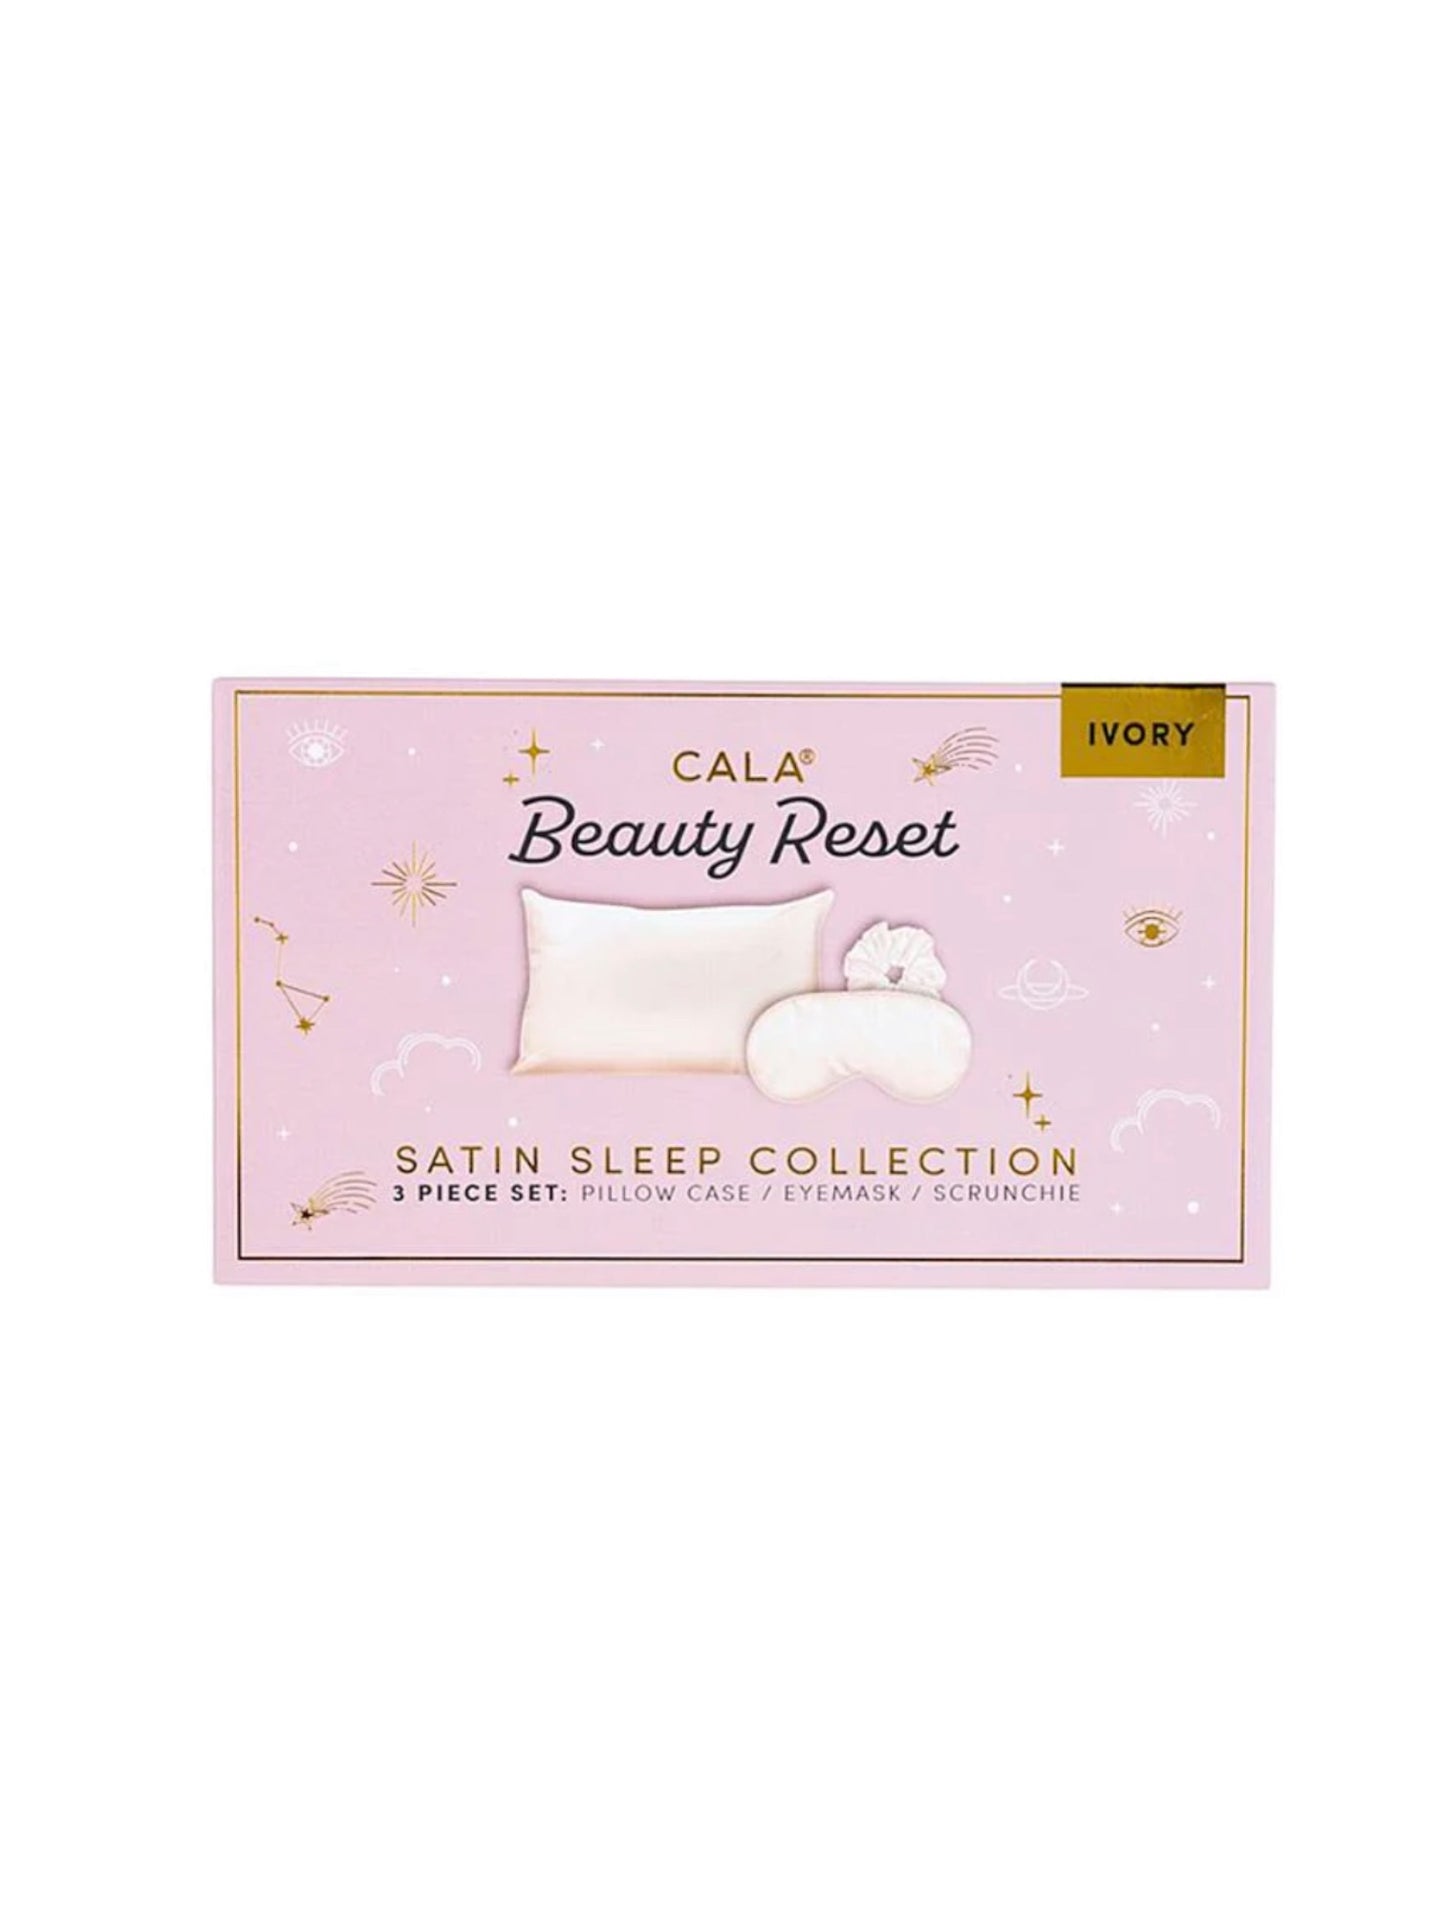 Beauty Reset Satin Sleep Collection Ivory